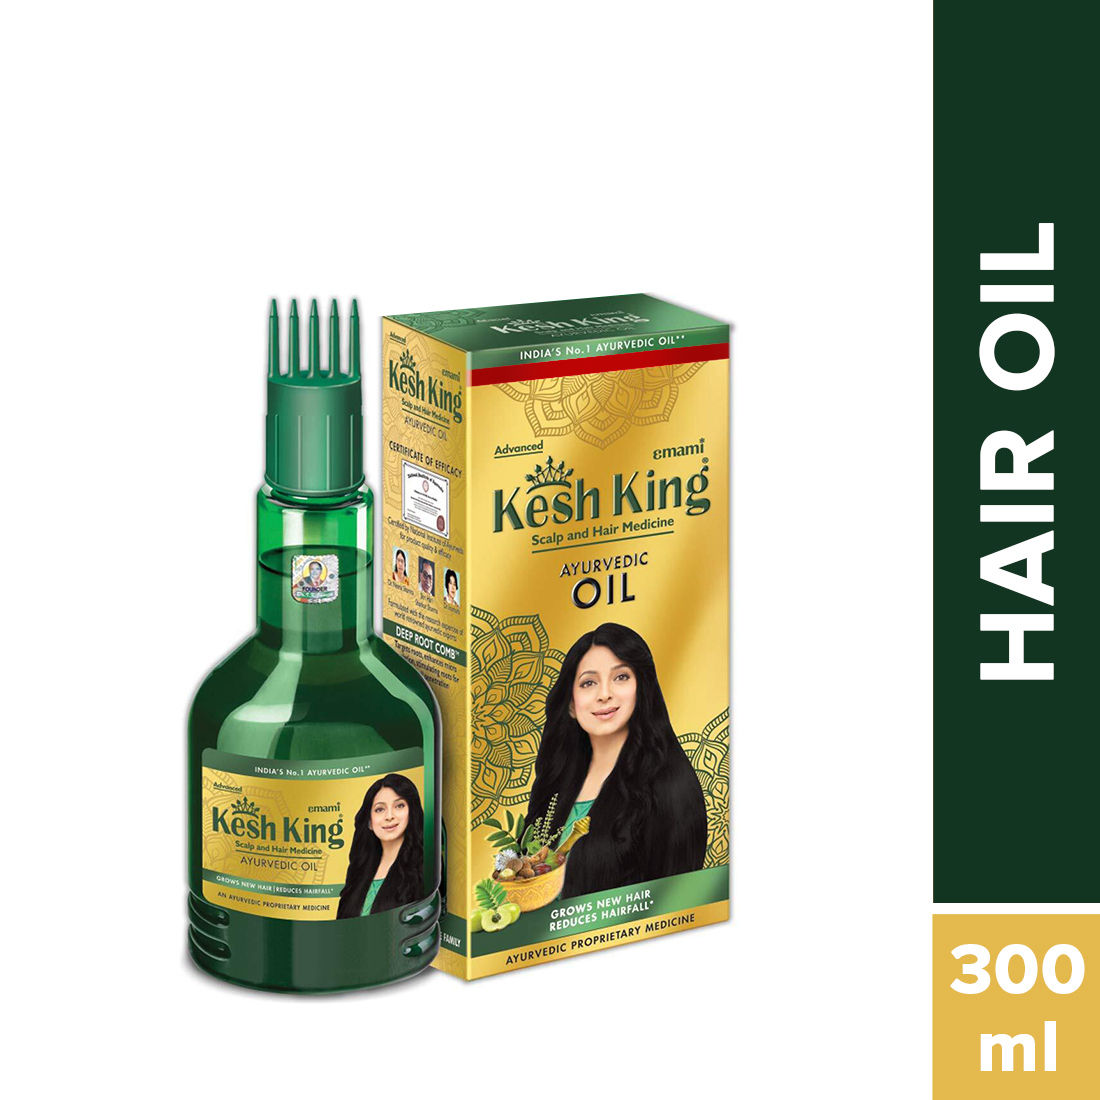 Buy Kesh King Ayurvedic Scalp and Hair Medicine Oil, 300 ml Online